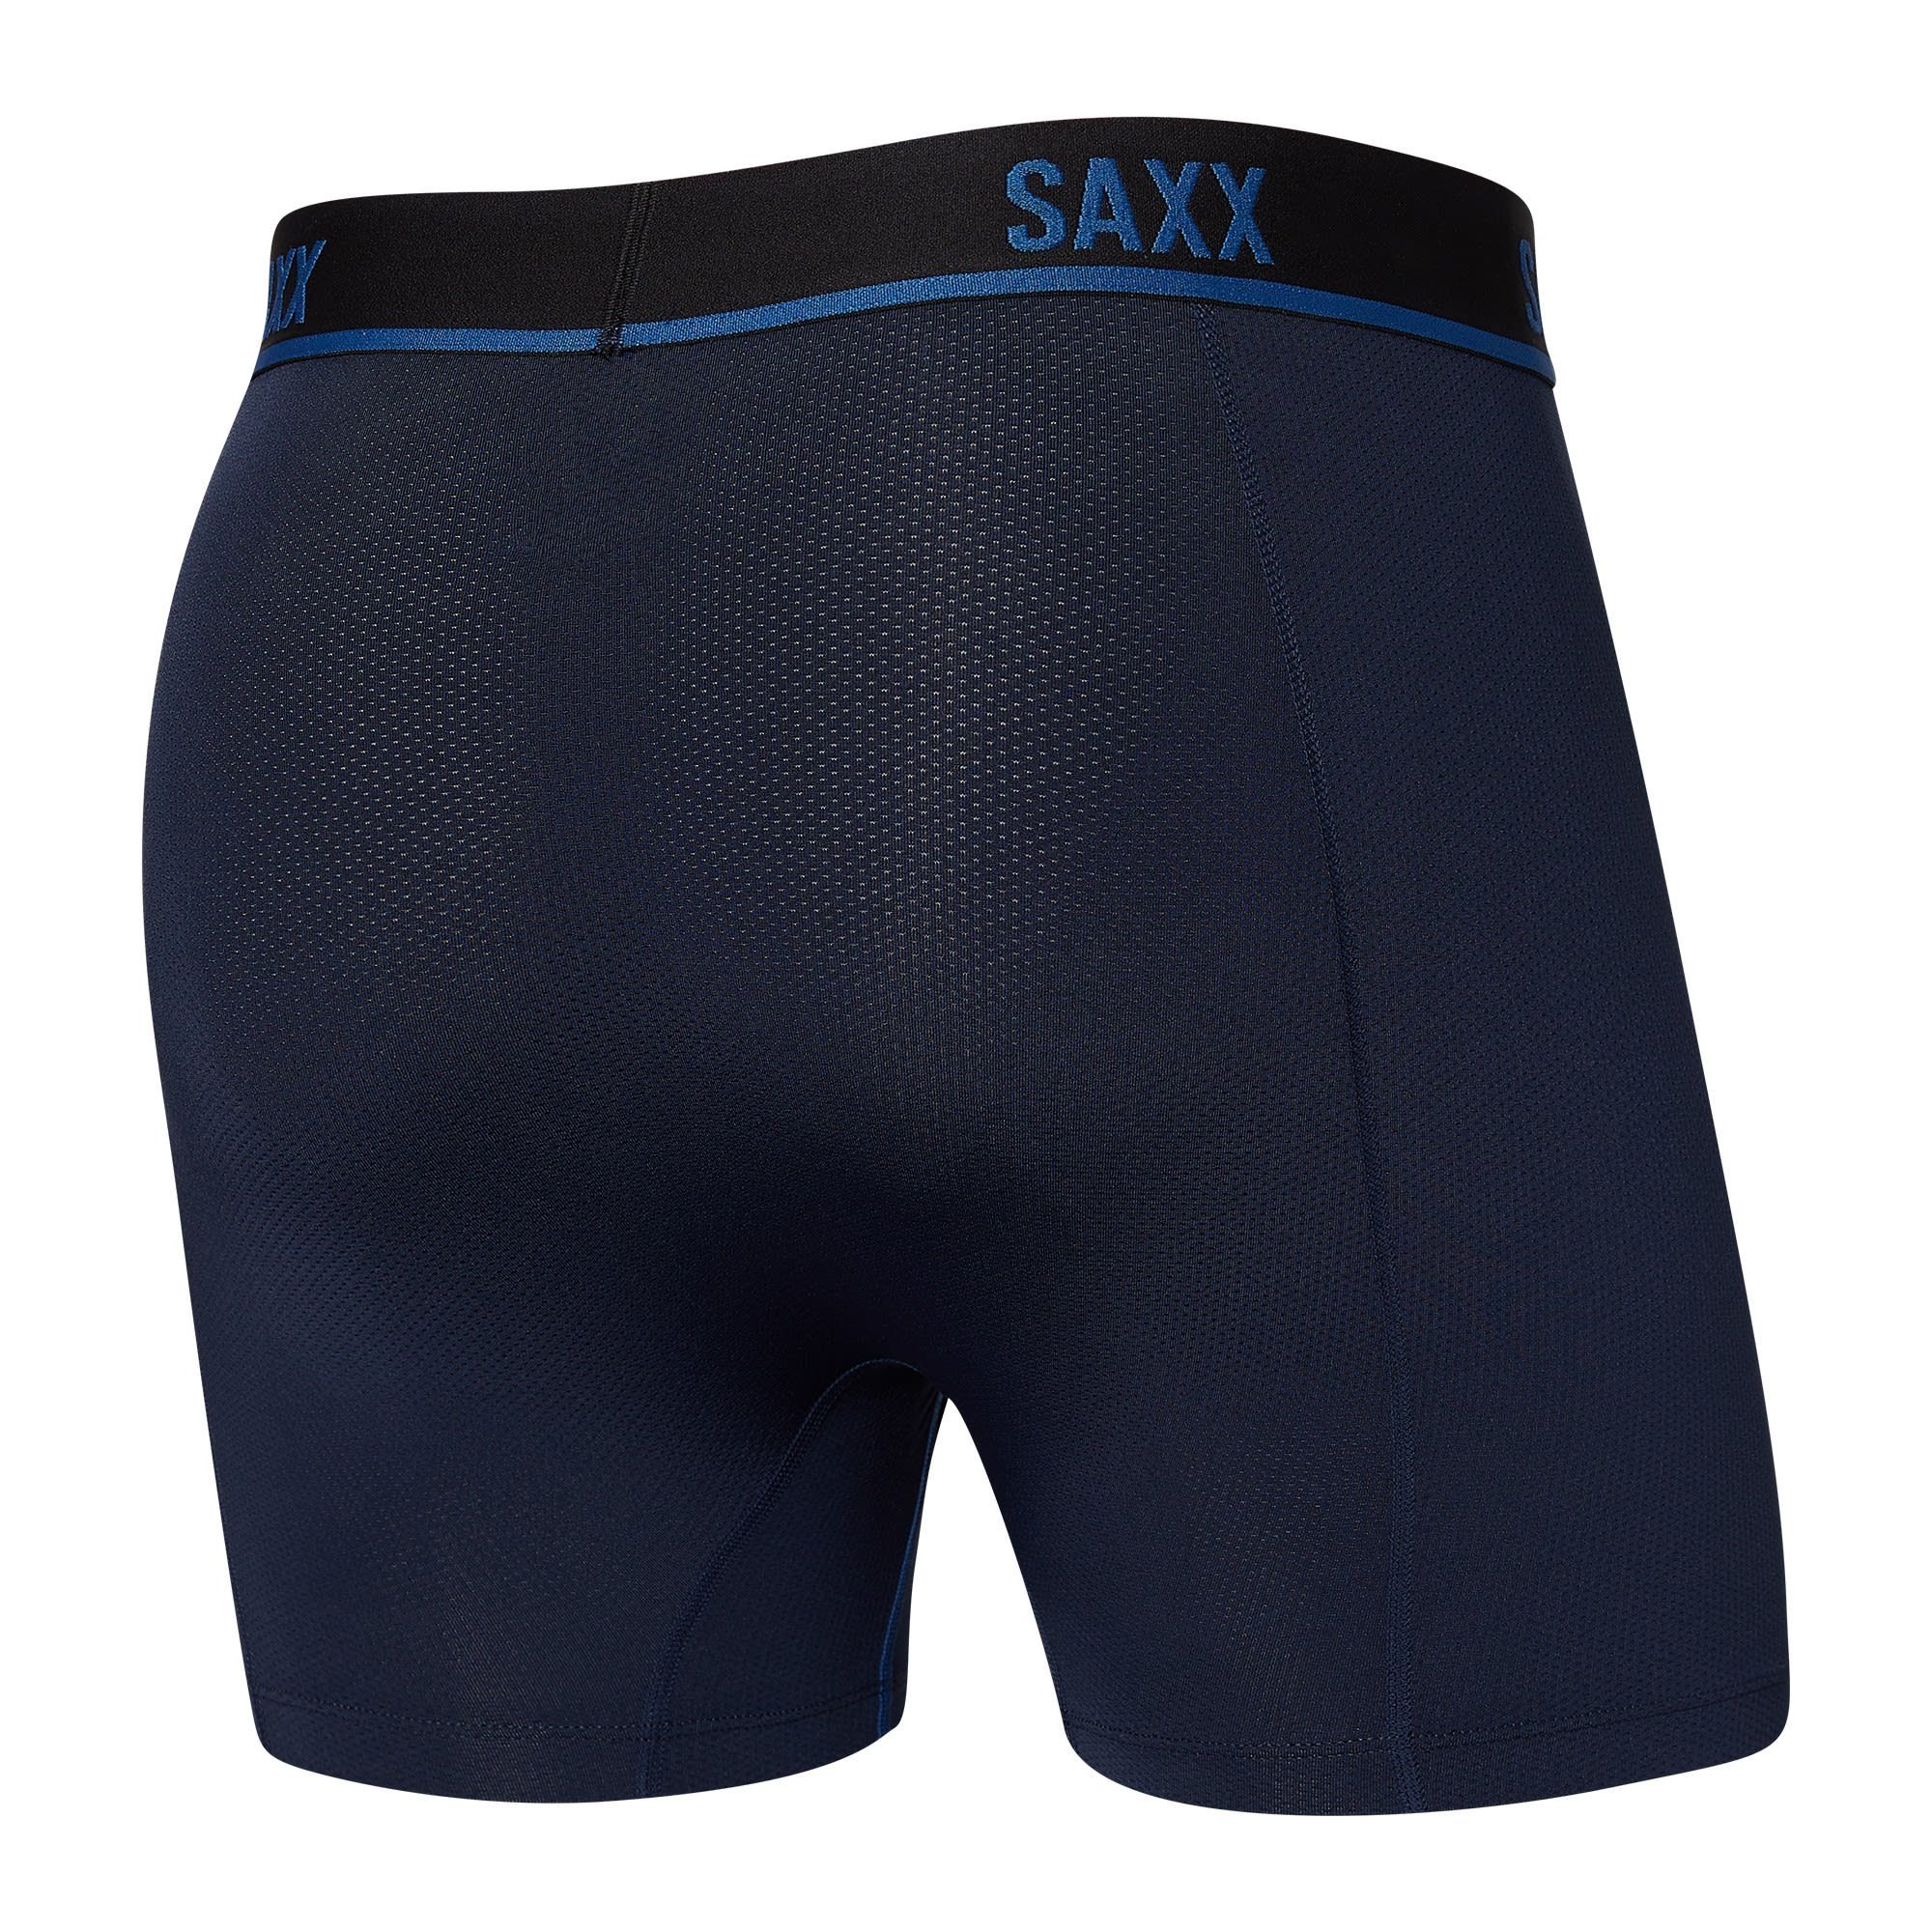 Saxx Light Kinetic Boxer M Lange City - Navy Mesh Compression Blue SAXX Unterhose Brief